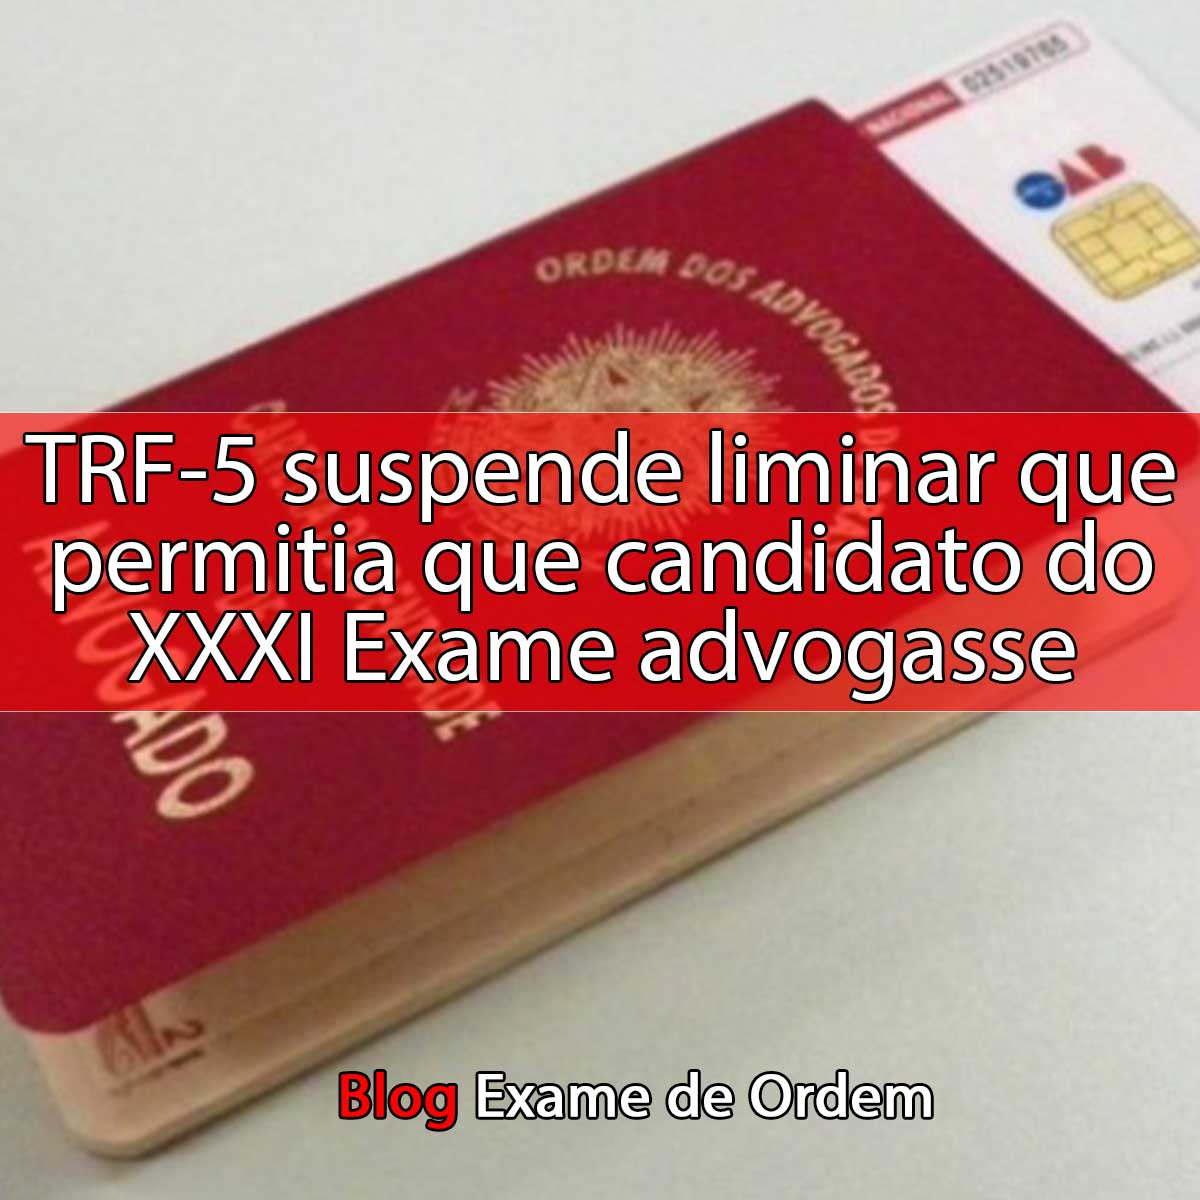 TRF-5 suspende liminar que permitia que candidato do XXXI Exame advogasse